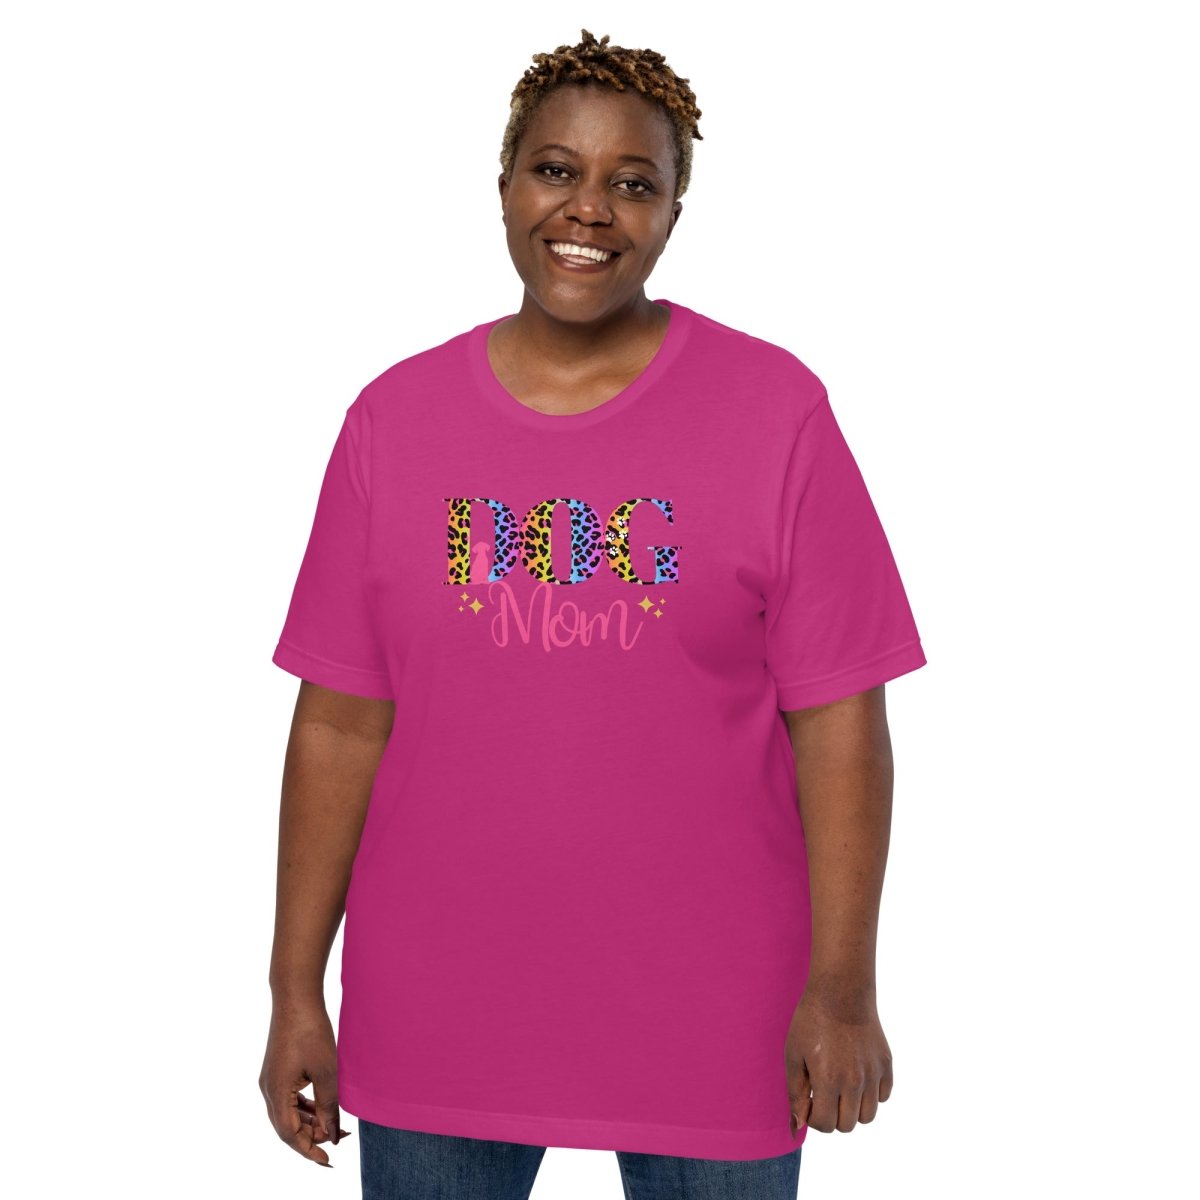 Dog Mom Leopard and Stars T-Shirt - DoggyLoveandMore